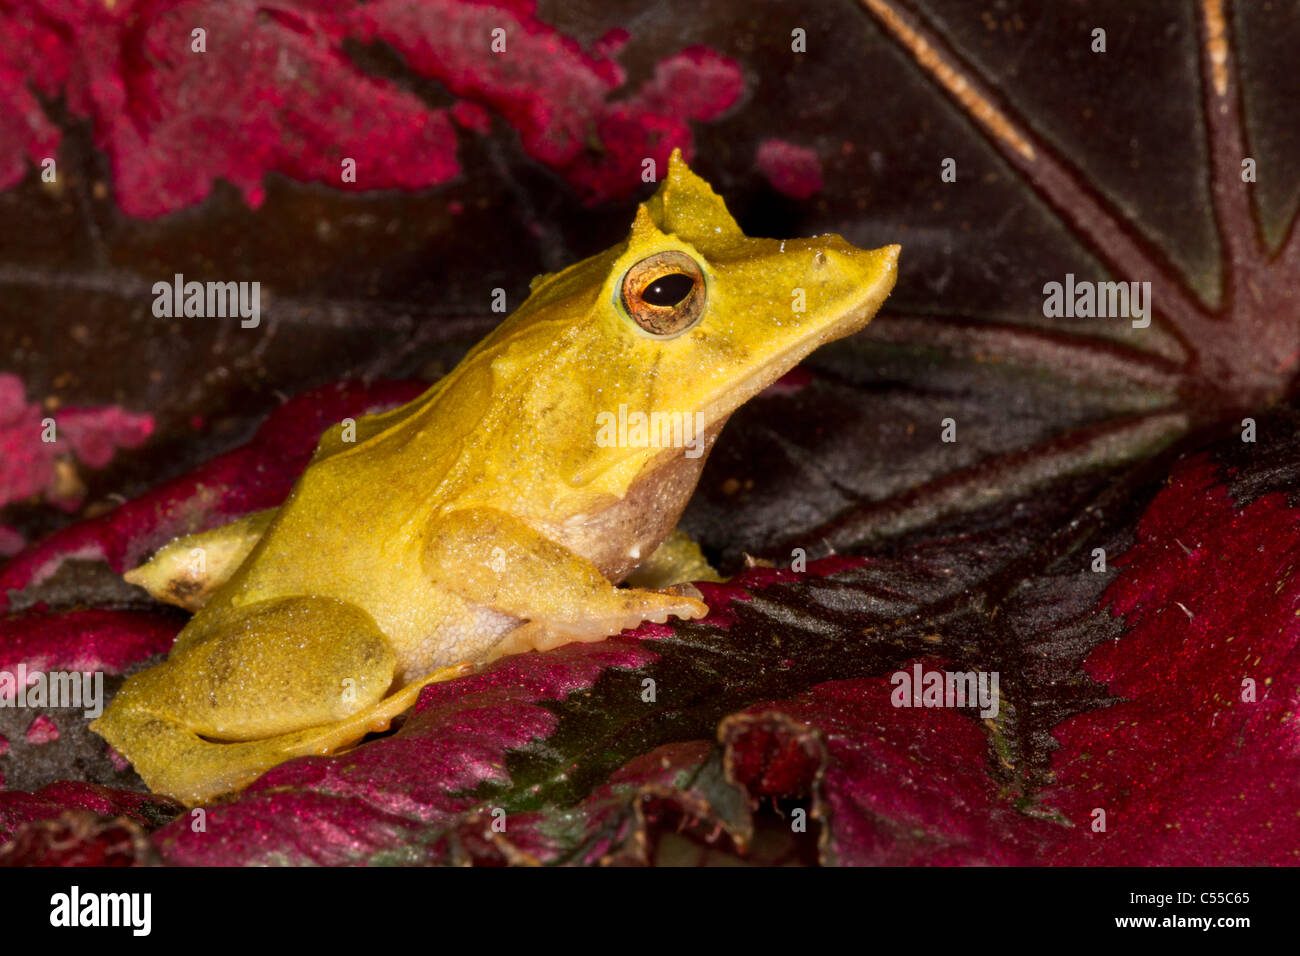 Close-up of a Solomon Island Leaf frog (Ceratobatrachus guentheri) Stock Photo